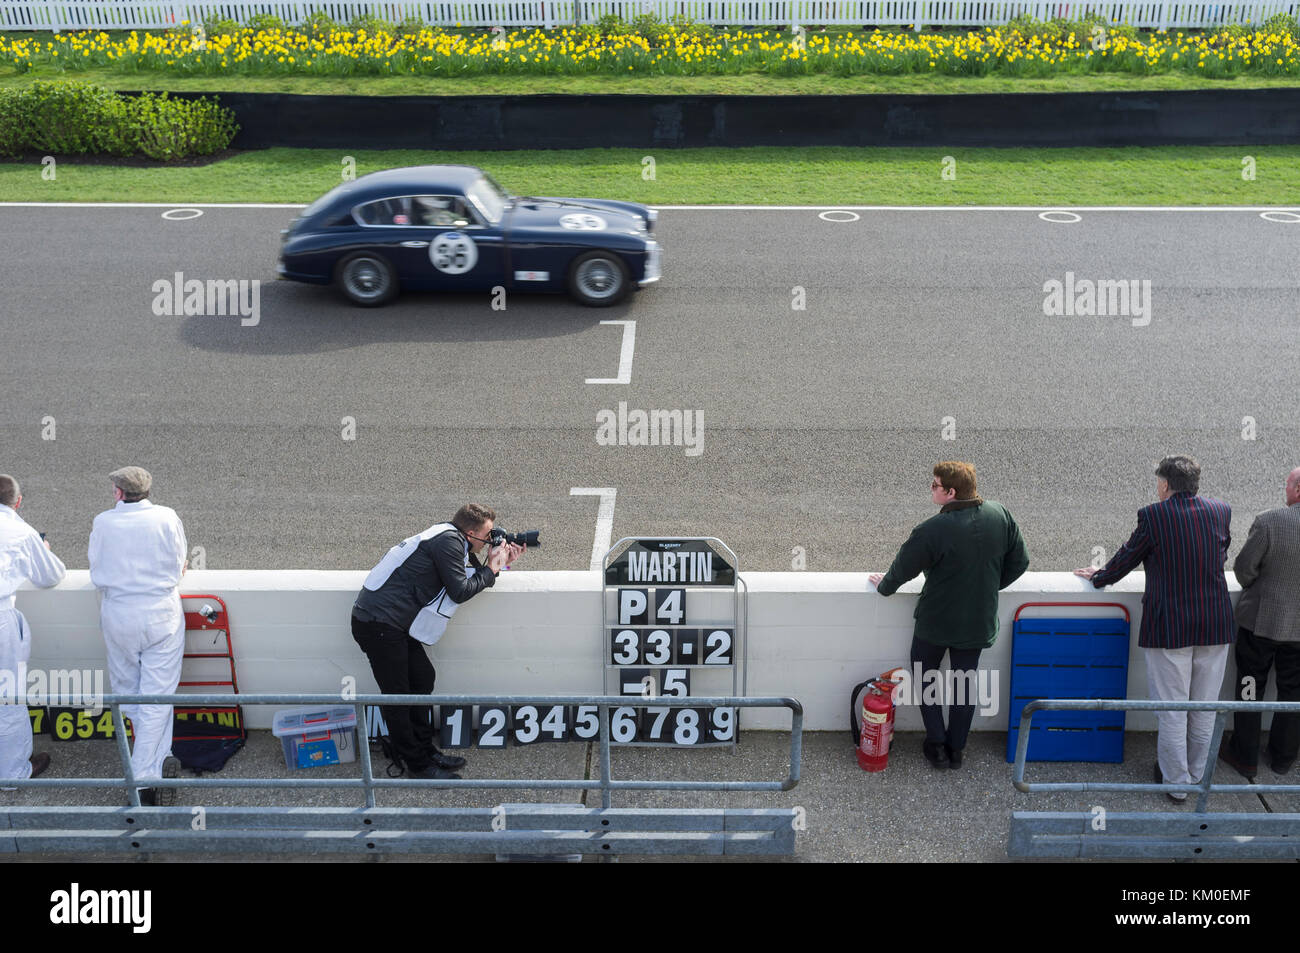 Finish Line Goodwood Revival motor racing Event, Foto und Pit Crew Stockfoto